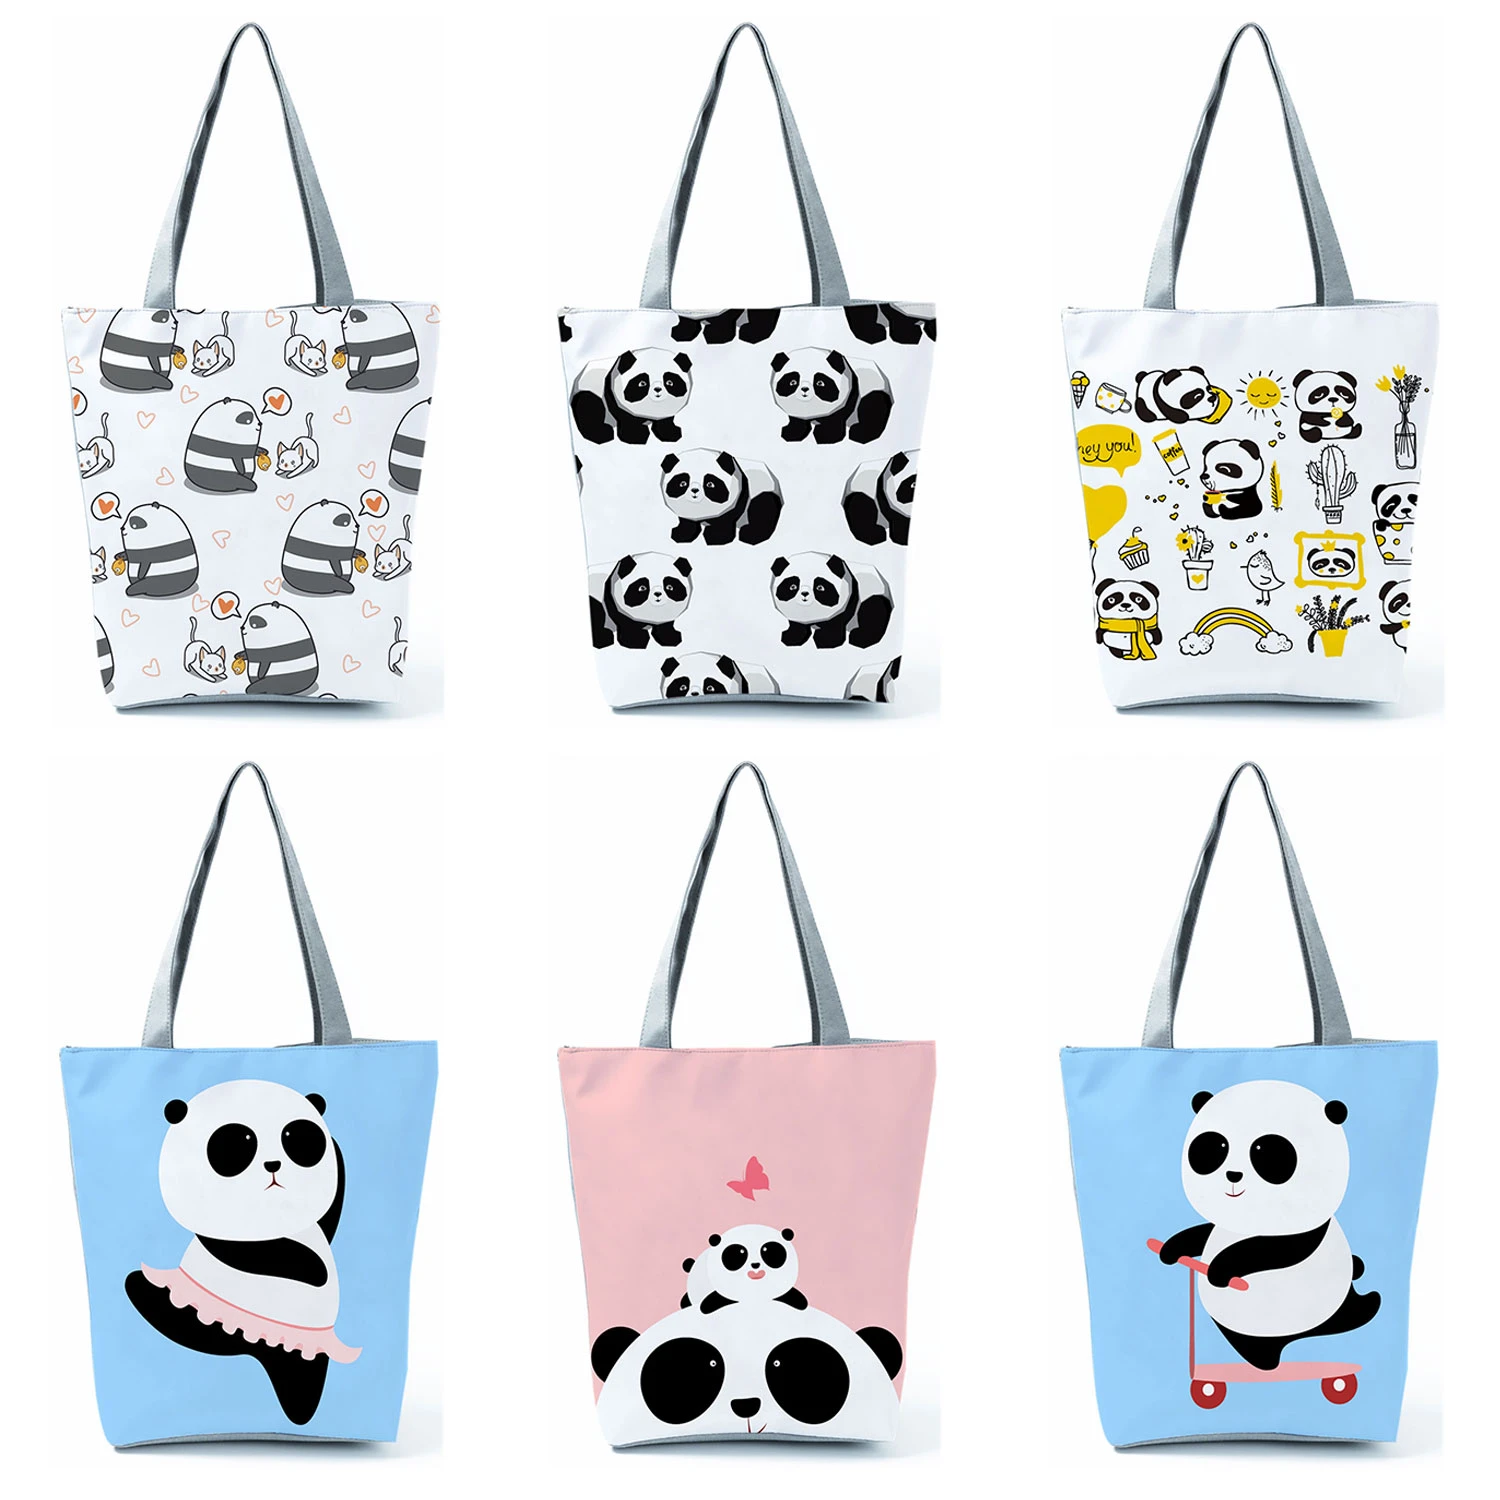 Cute Panda Print Handbags Cartoon High Capacity Women Shopping Bag Eco Reusable Casual Shoulder Bag Travel Beach Bag Lady Tote